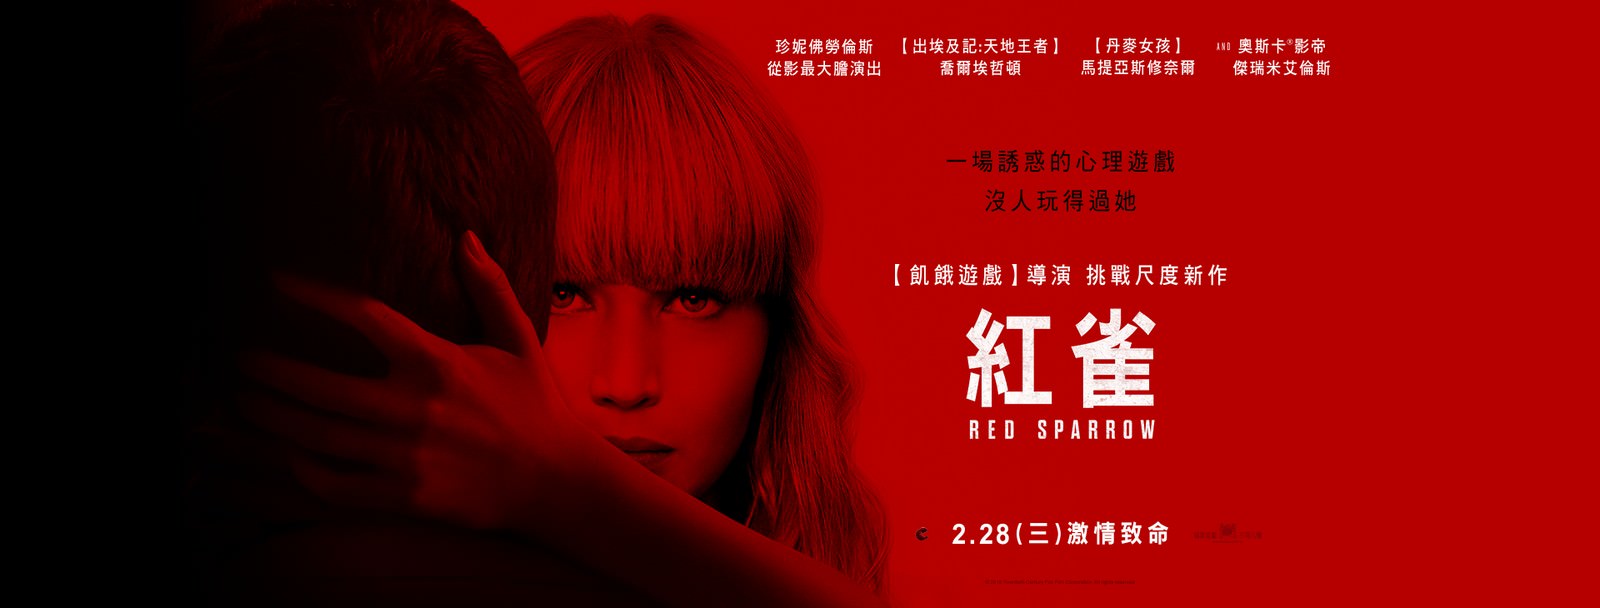 Movie, Red Sparrow(美國) / 紅雀(台) / 红雀特工(港), 電影海報, 台灣, 橫版